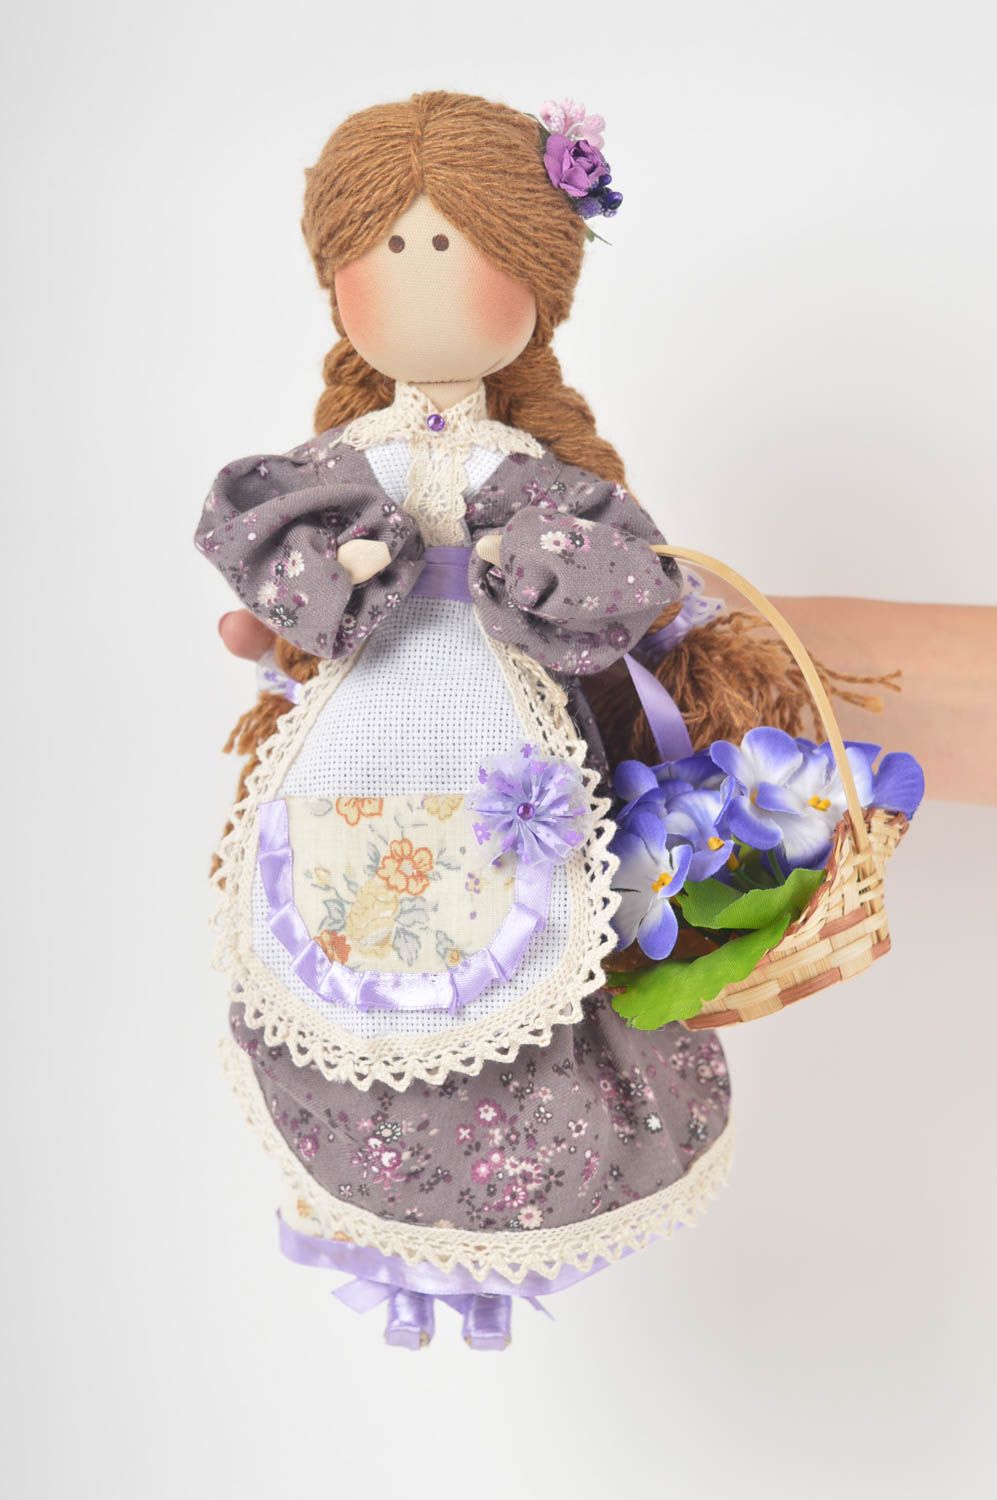 Designer doll in vintage dress stuffed toy designer childrens toy decor gift photo 4